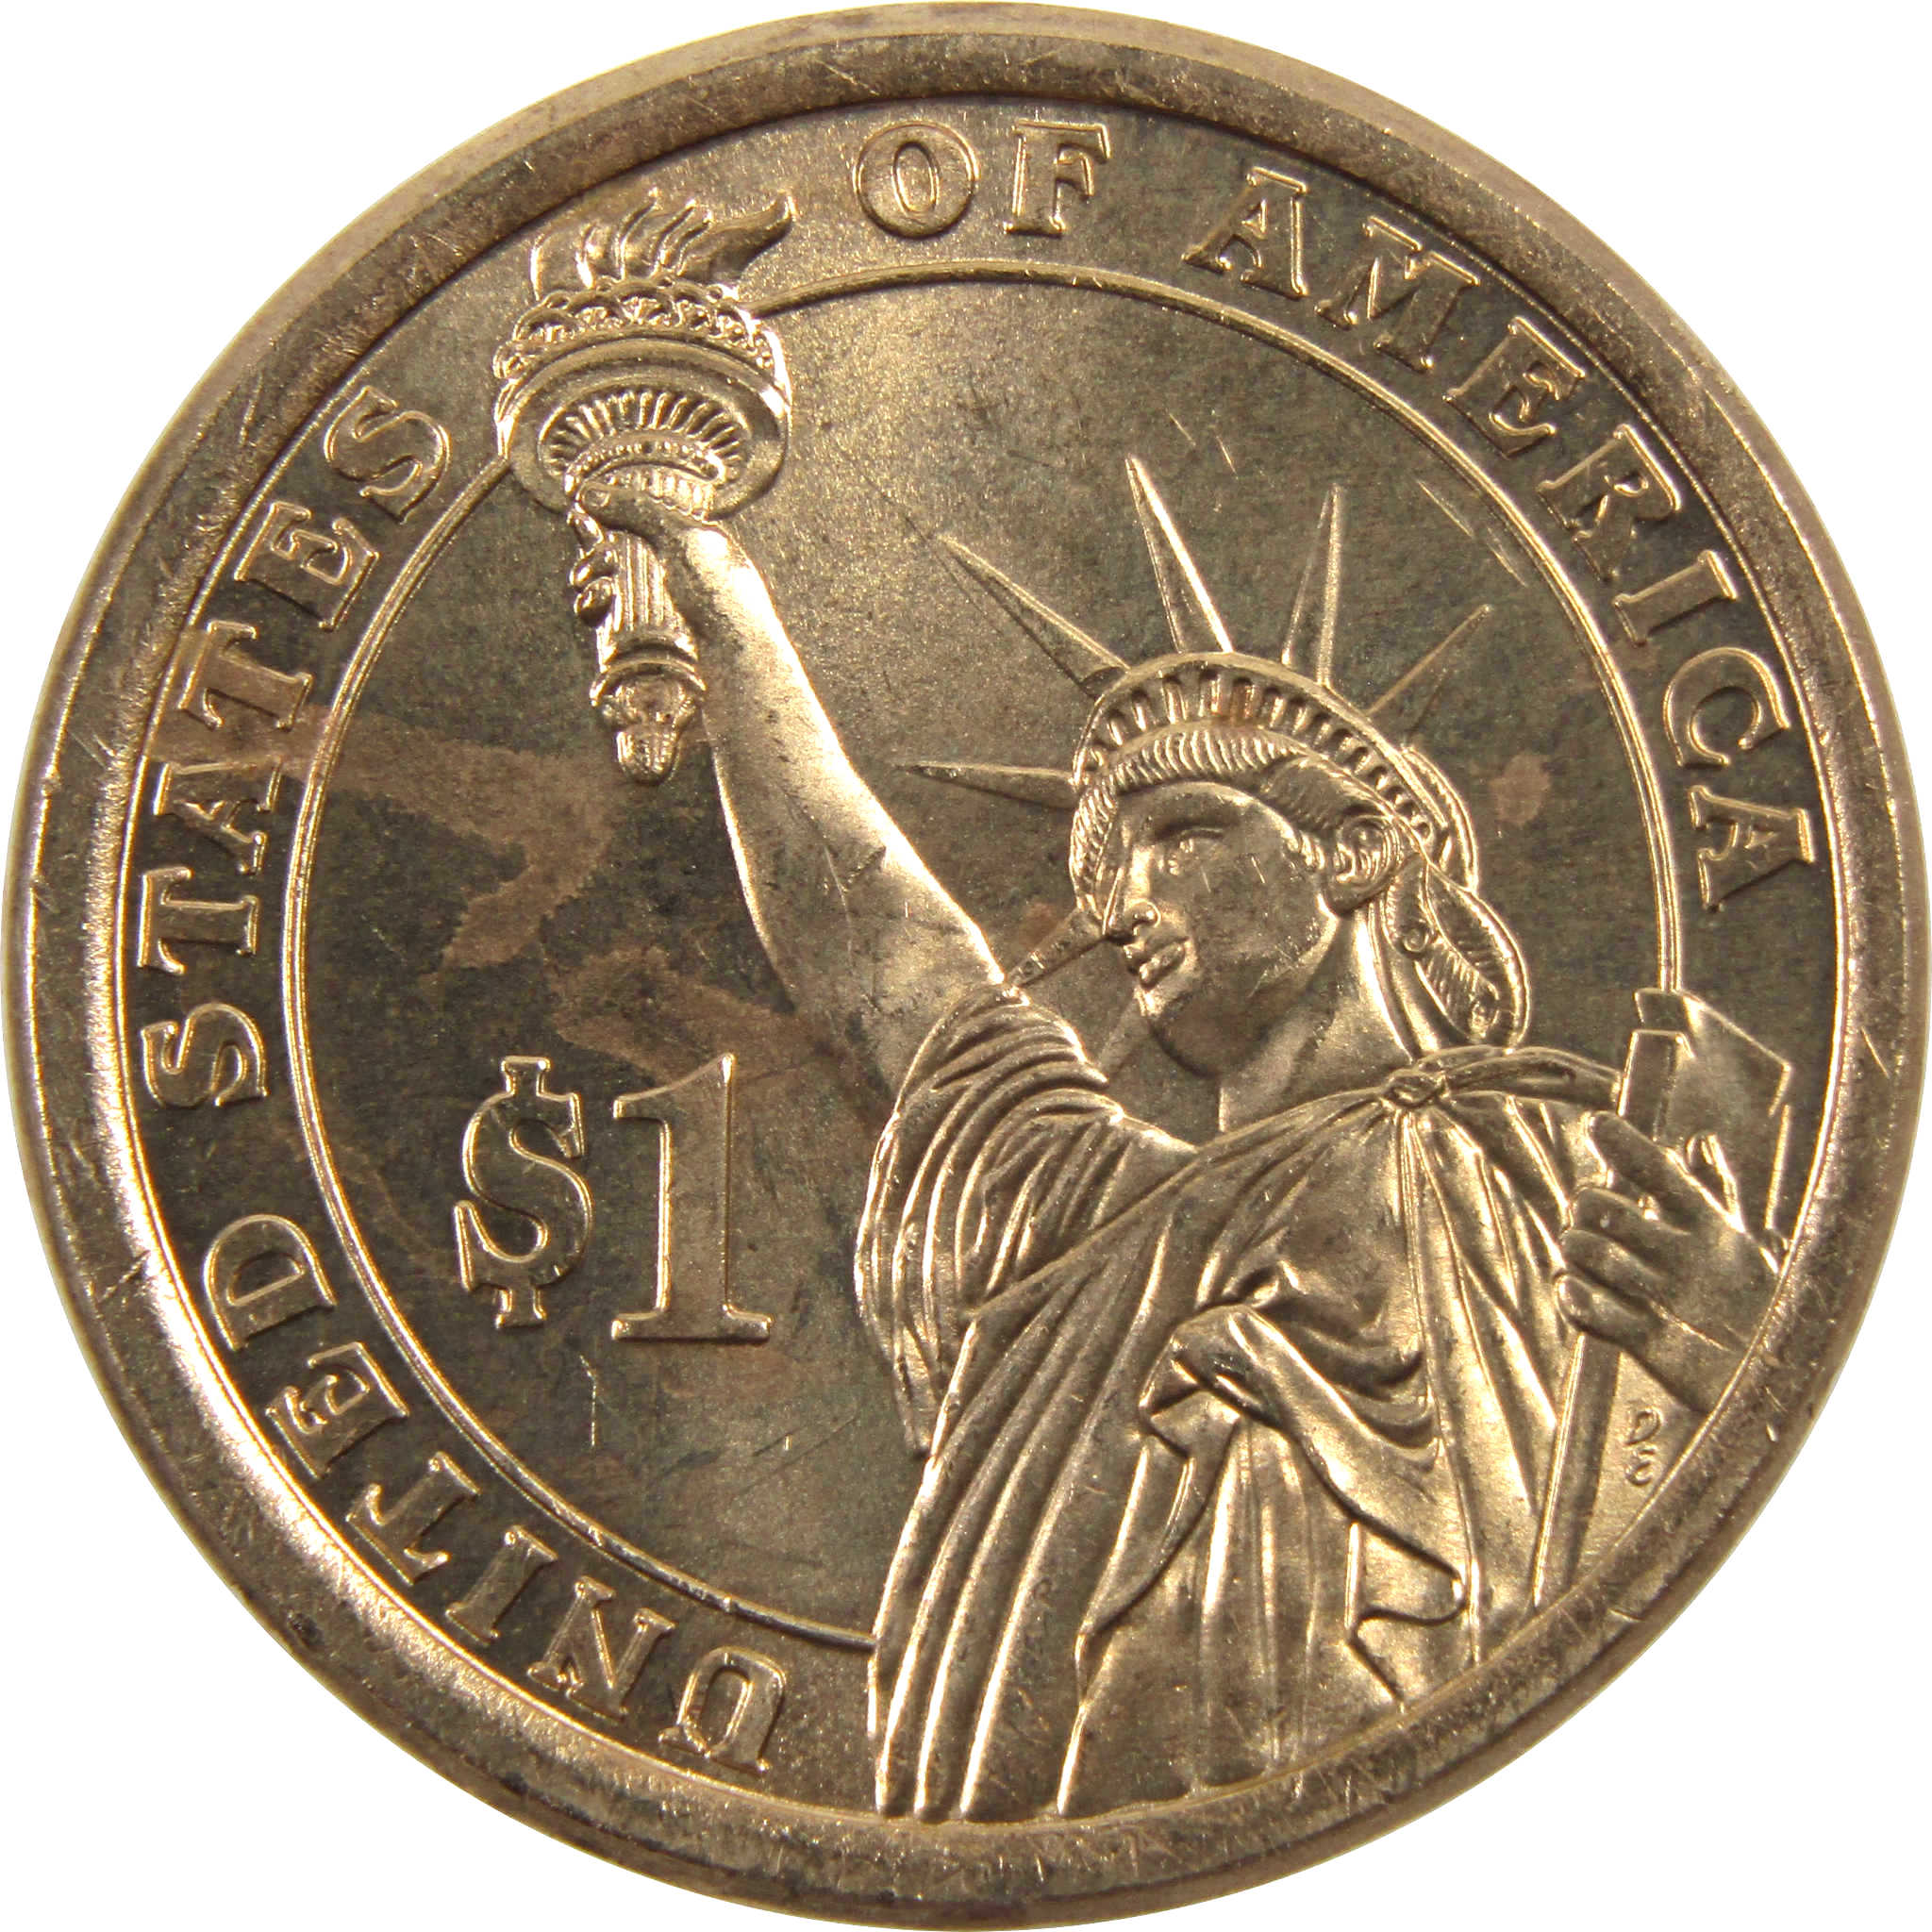 2015 P Lyndon B Johnson Presidential Dollar BU Uncirculated $1 Coin